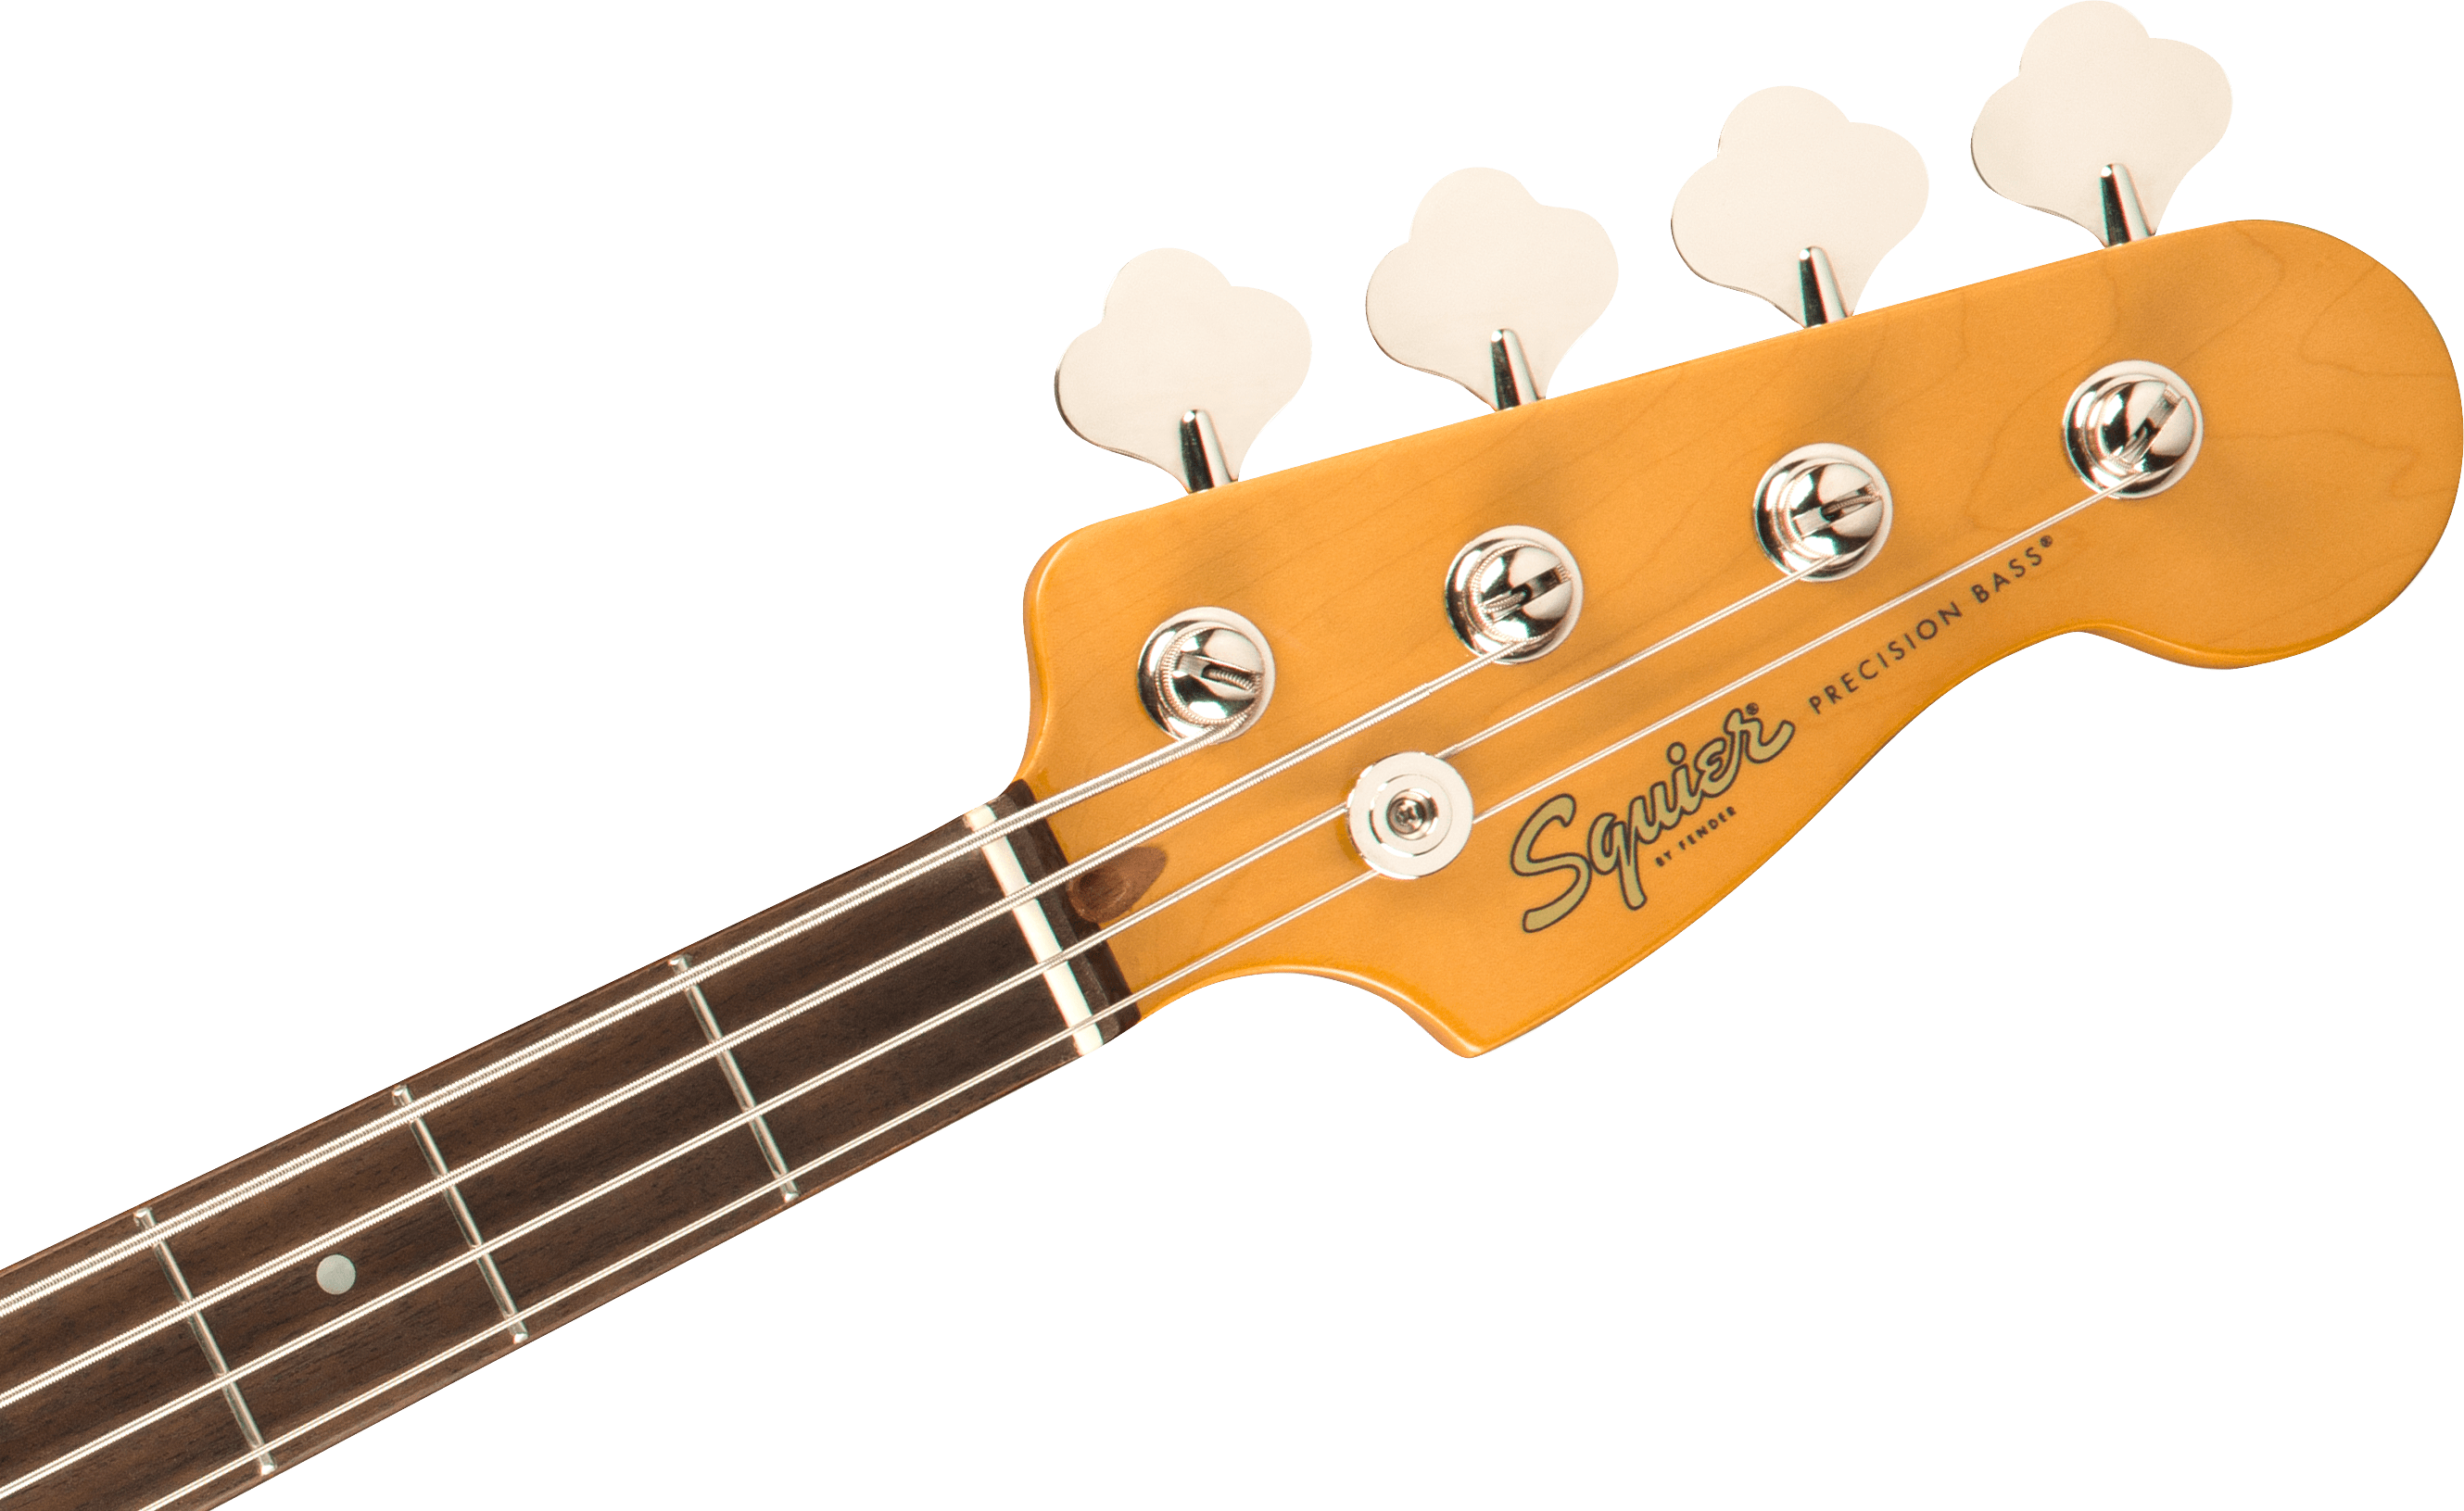 Squier Classic Vibe '60s Precision Bass in 3 tone sunburst